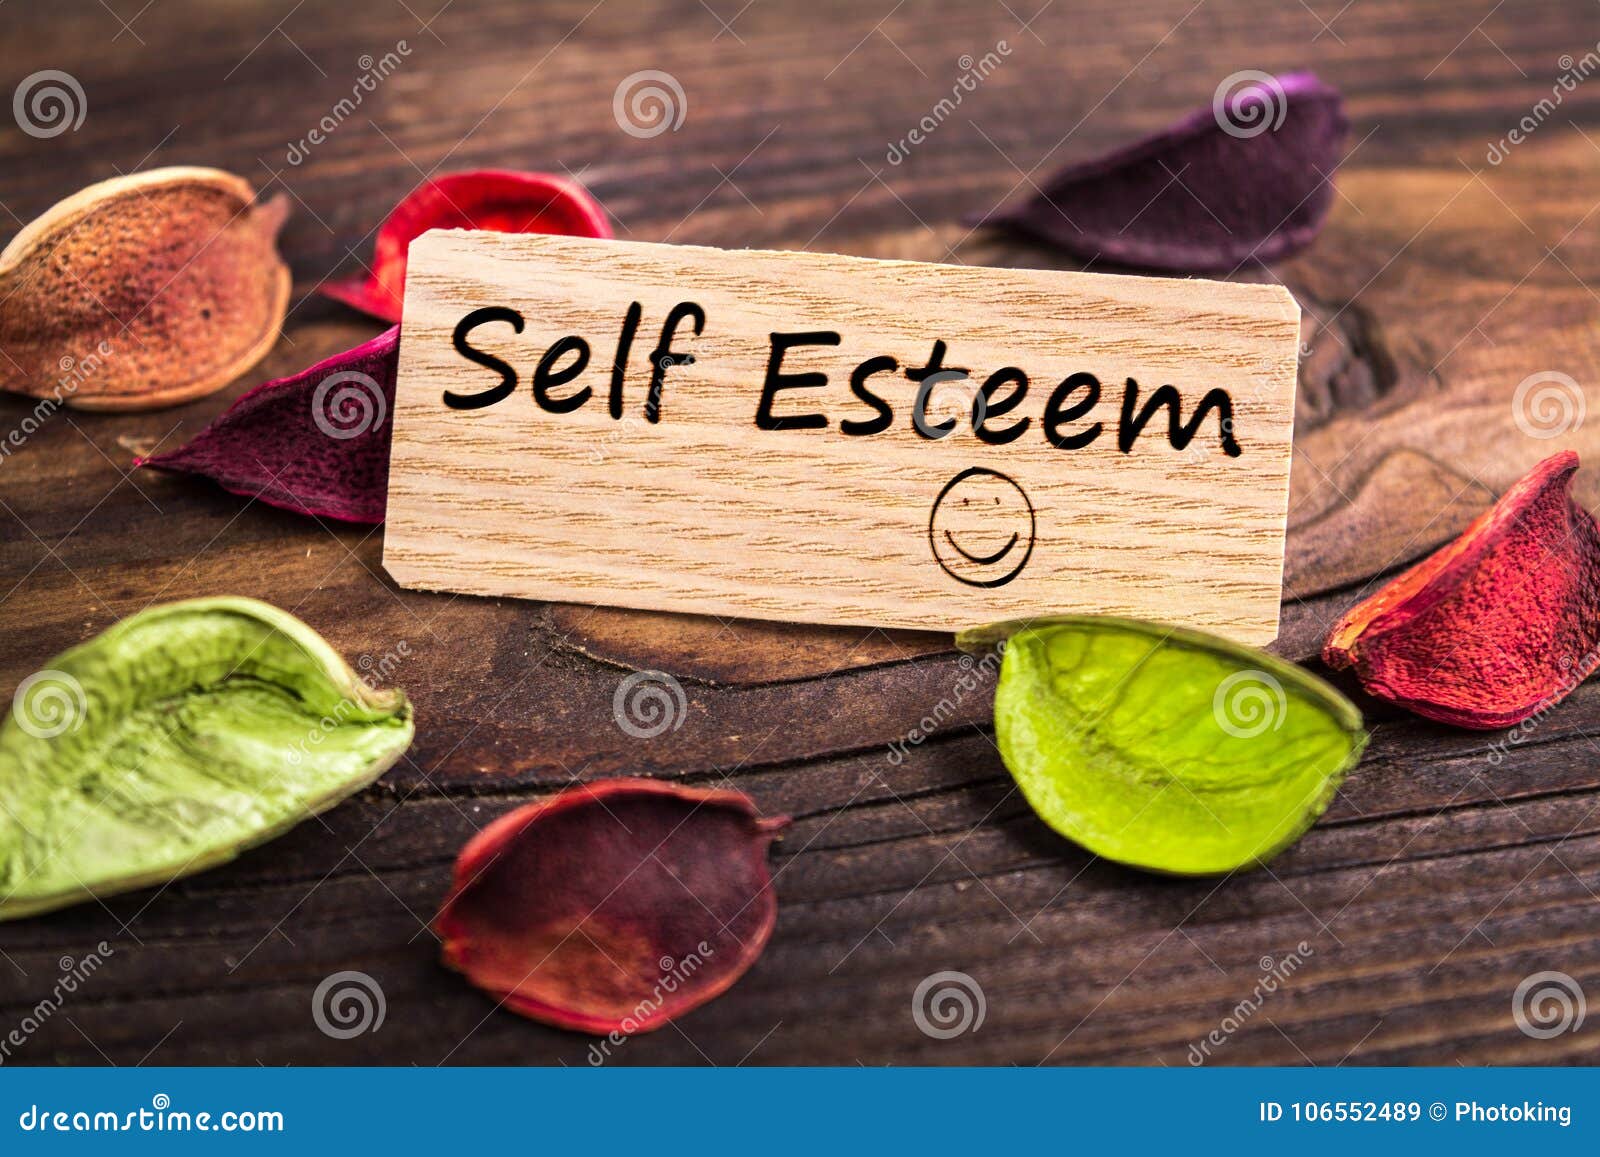 self esteem text in card